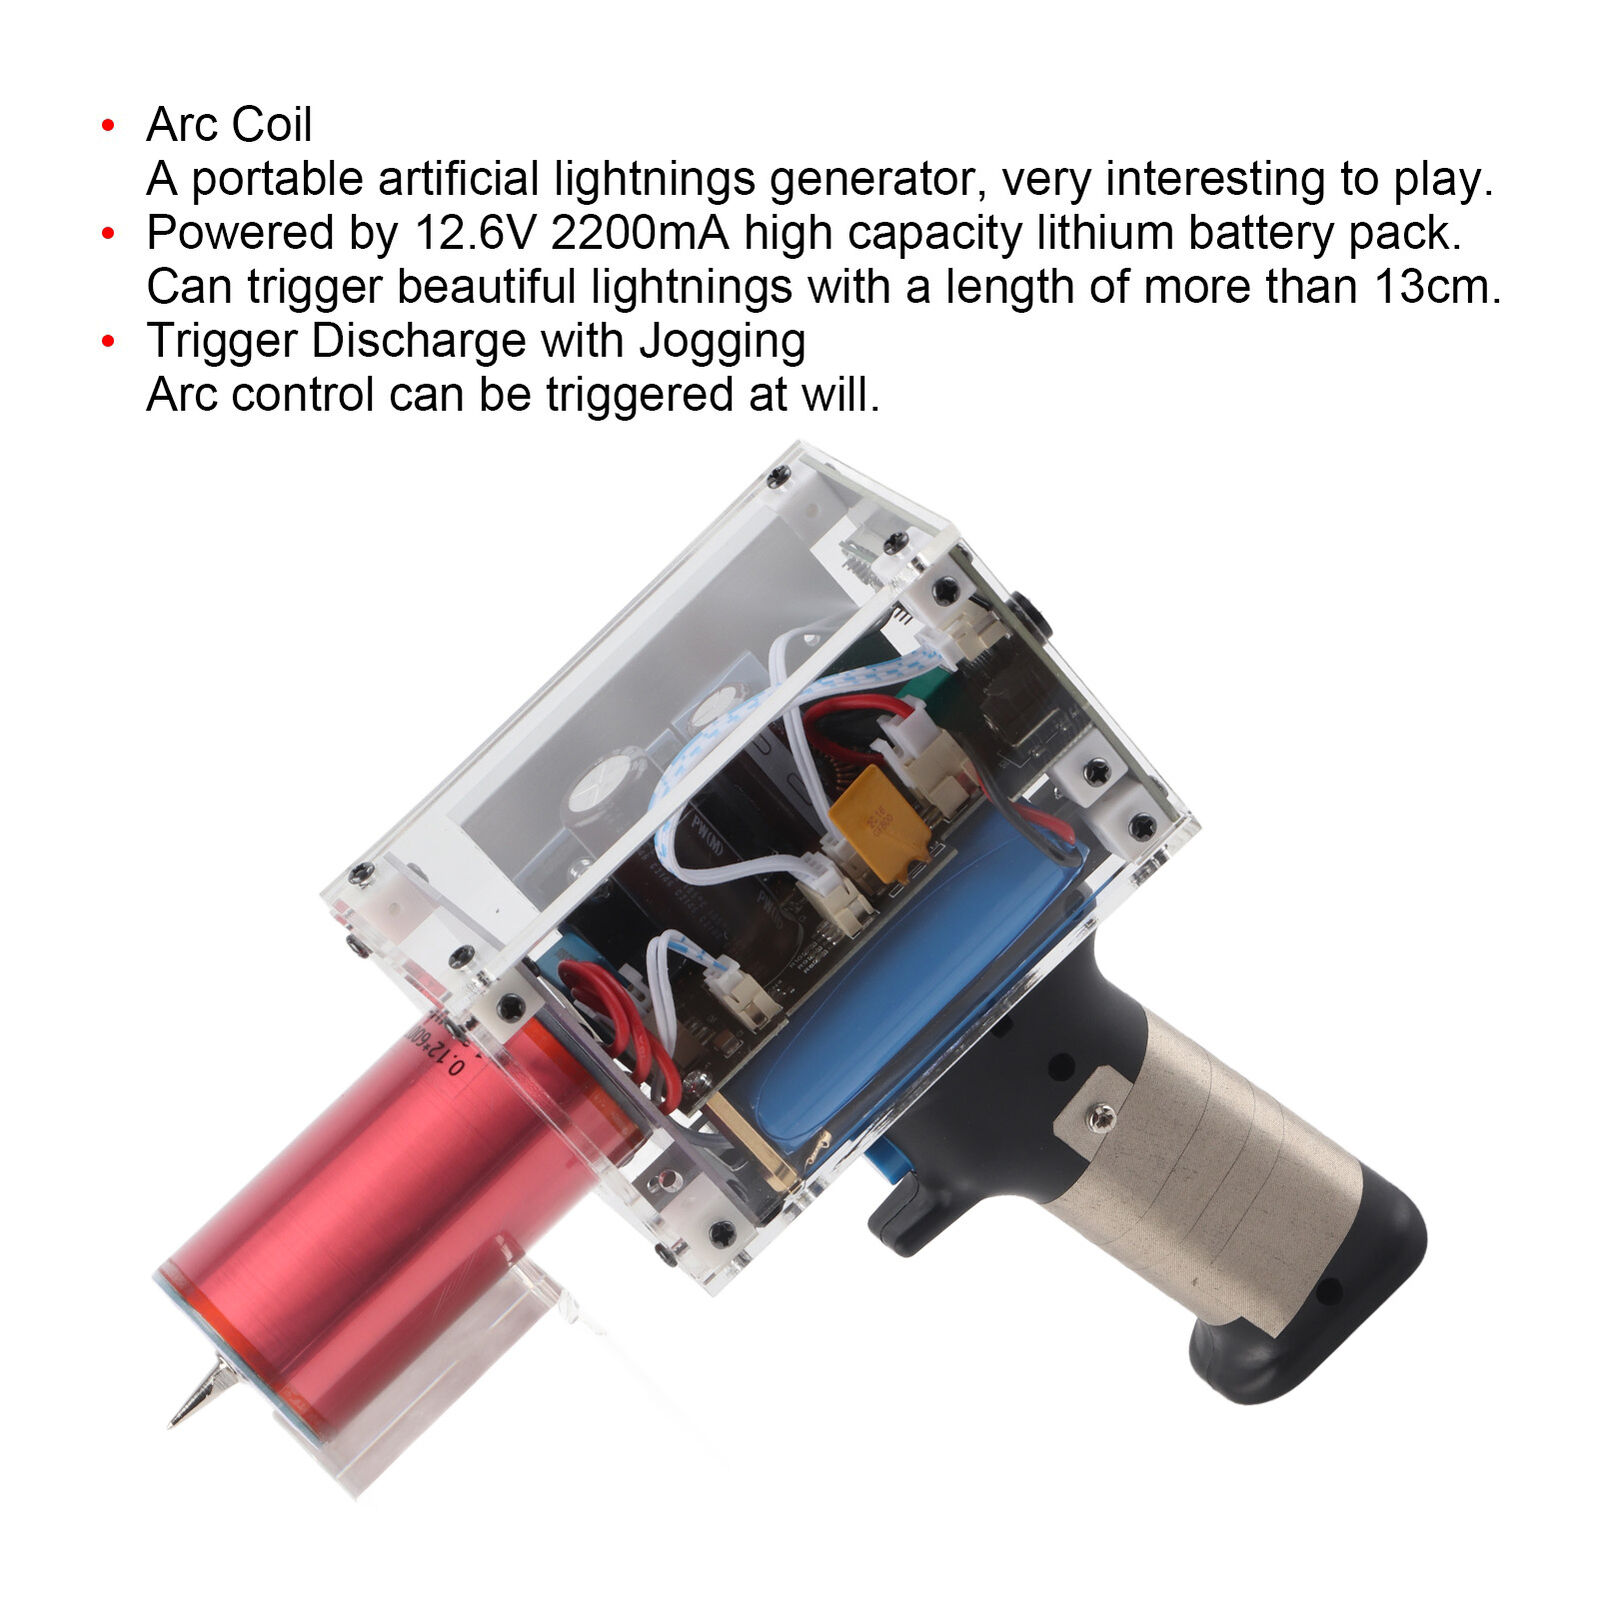 Arc Coil Kit Plasma Science Experiment Toy Handheld Tool Set US Plug AC100‑240V♫